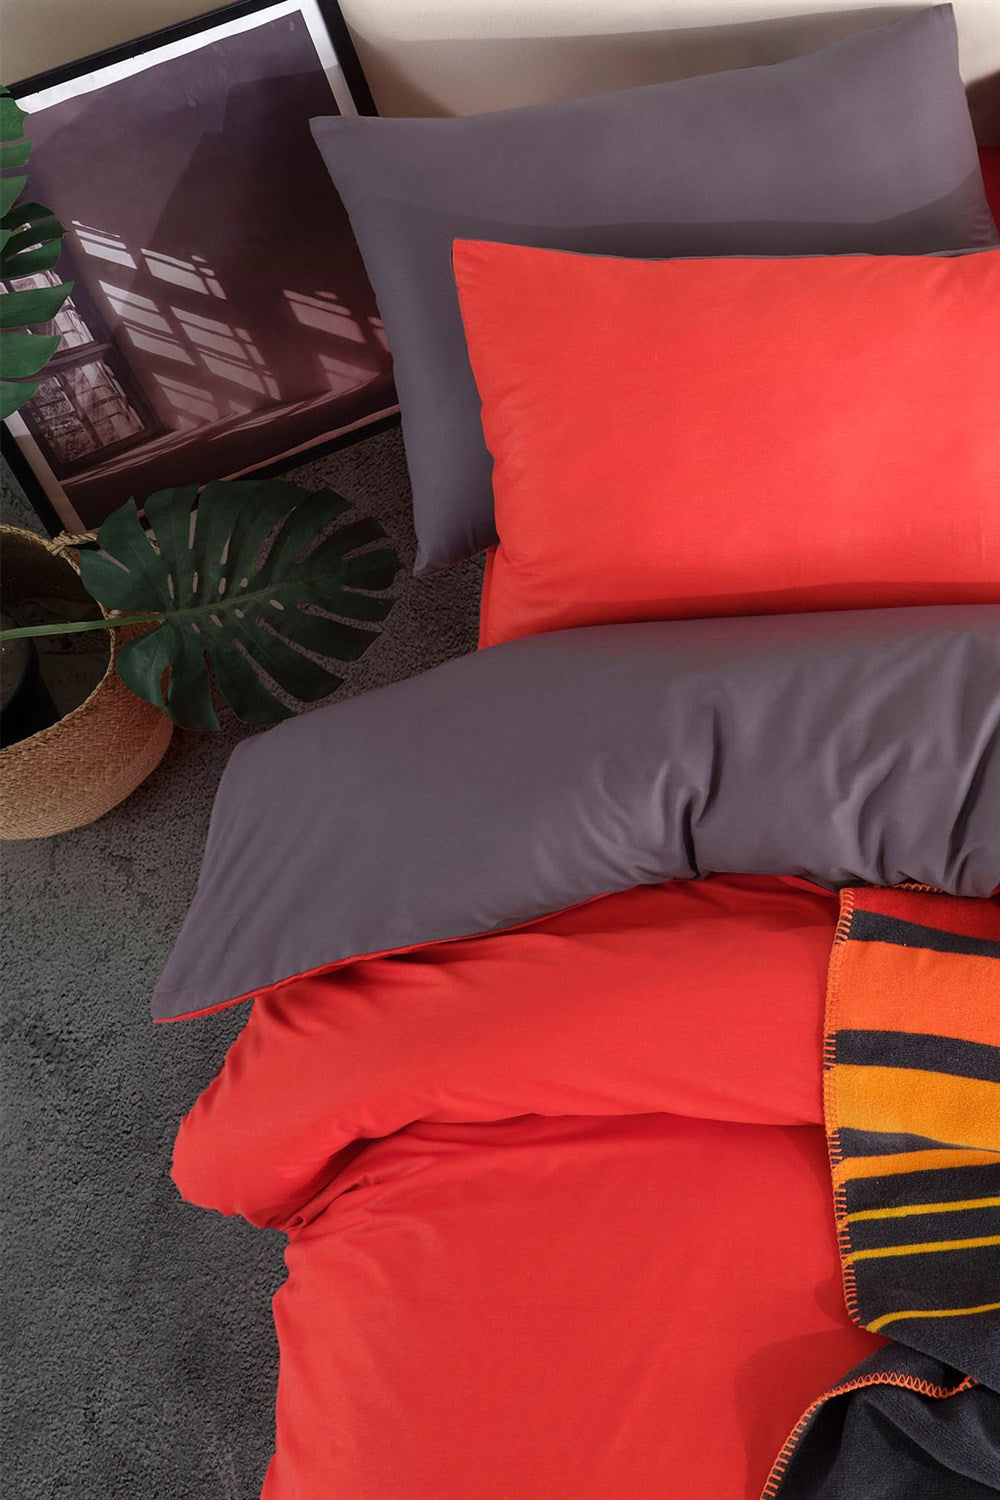 Iyi Geceler Istanbul - InLine Bettbezug-Set für Einzelbett 160x220cm Farbe: Rot